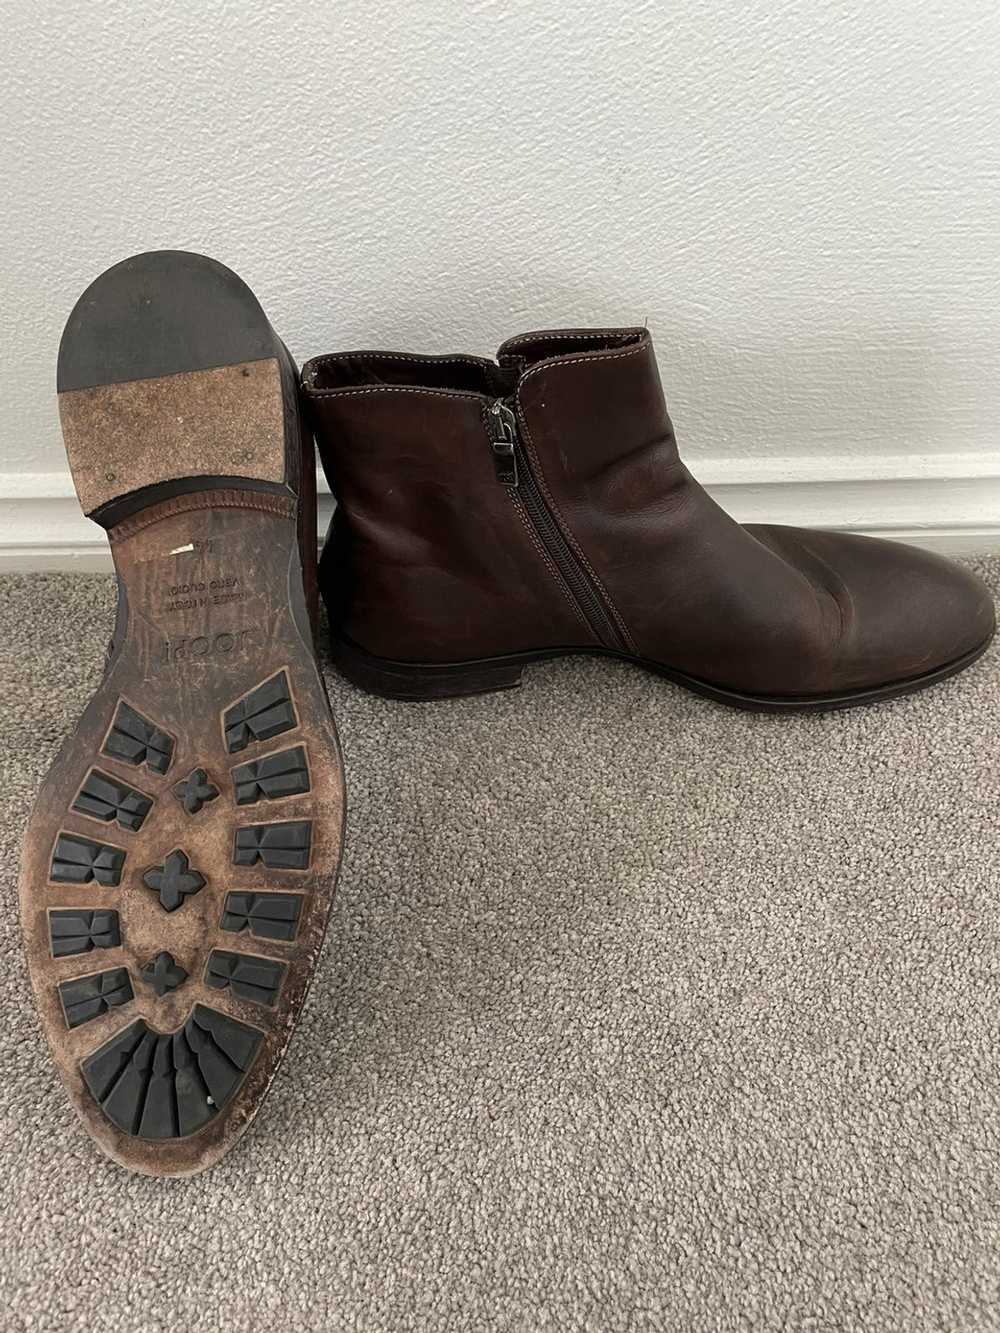 Joop! Joop brown leather side zip boots size 44 - image 3